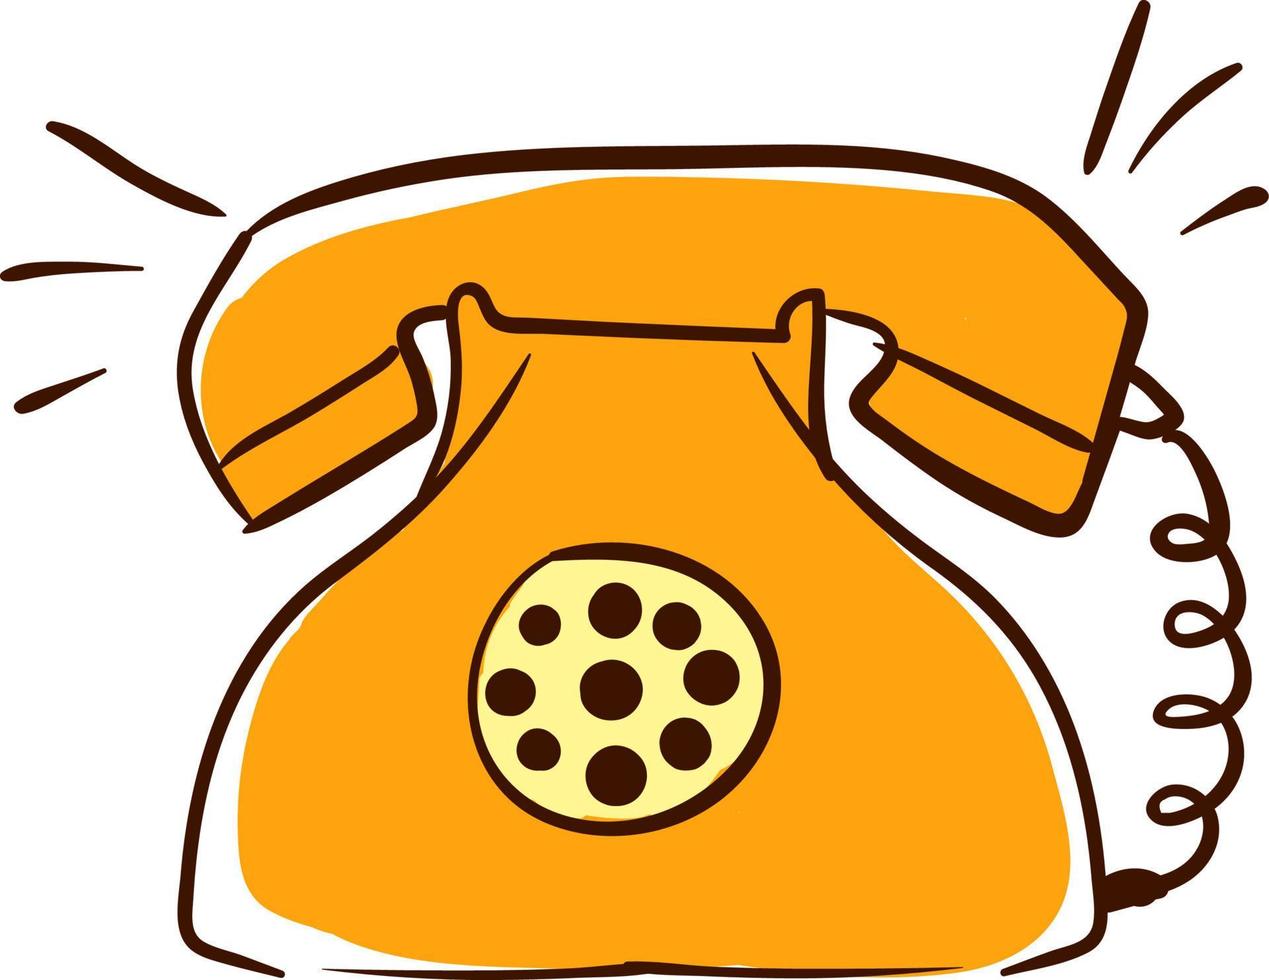 Yellow retro telephone, illustration, vector on white background.